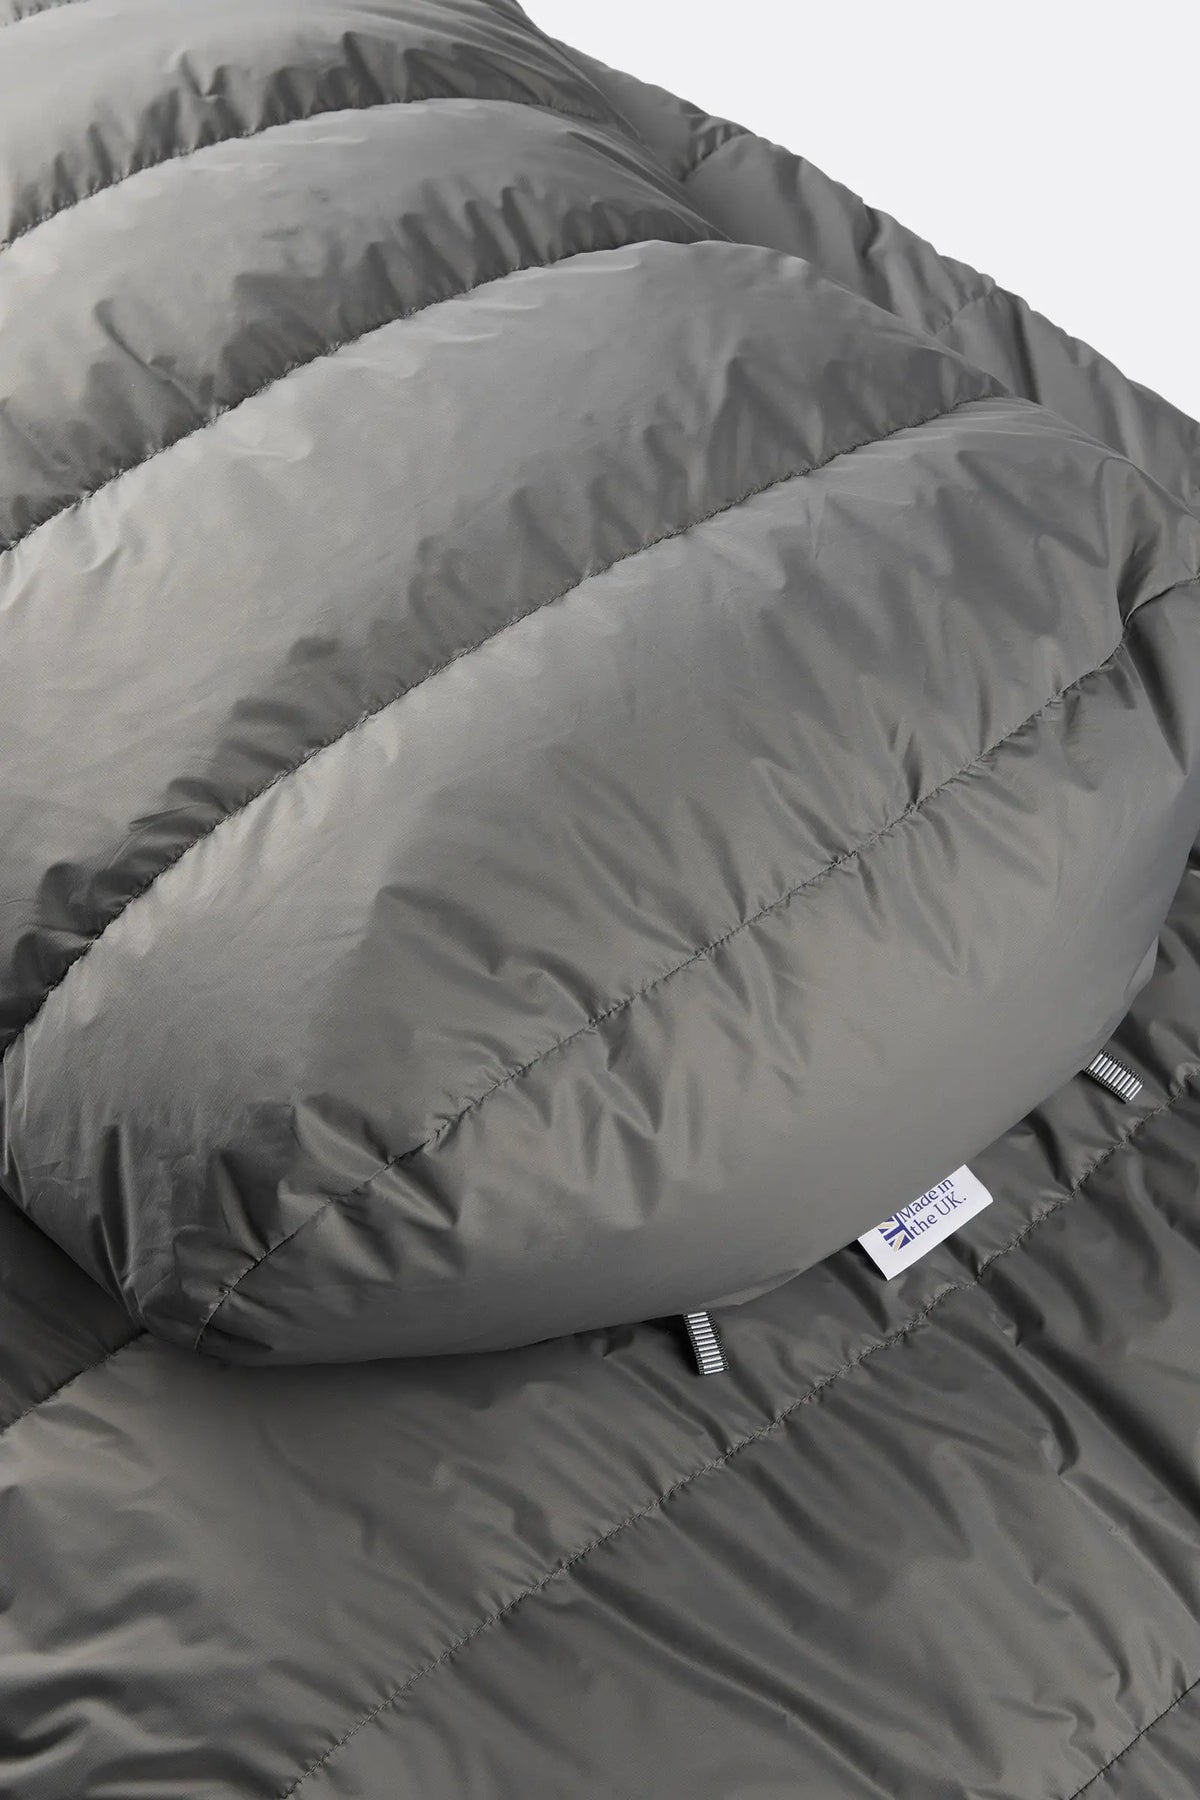 Rab Ascent Pro 400 Down Sleeping Bag (-2C)